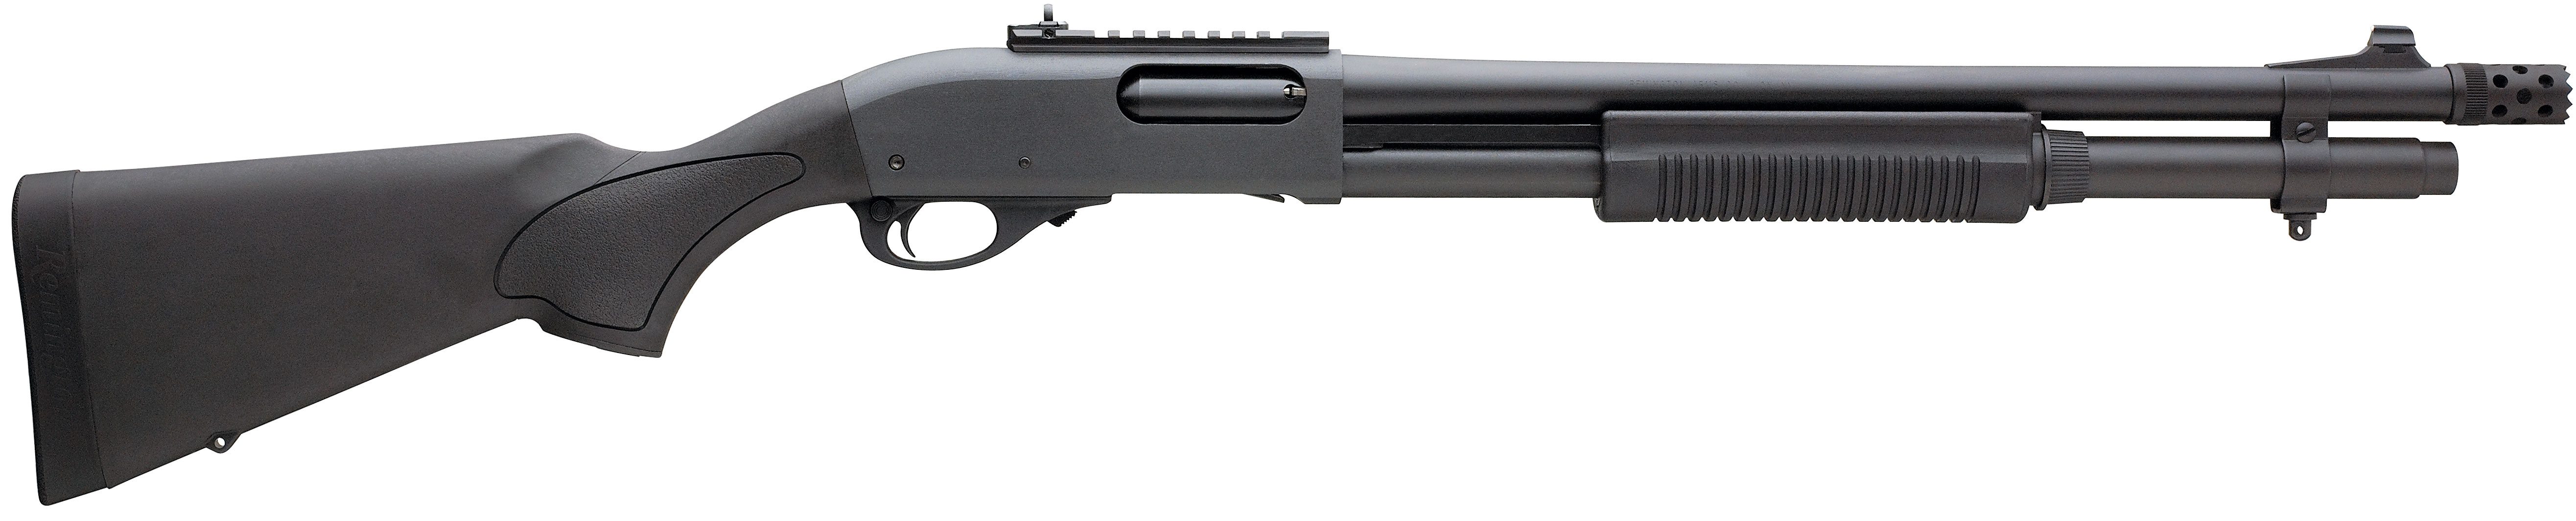 RA 870 TAC 12GA 18.5'' GHOST 6 - Long Guns